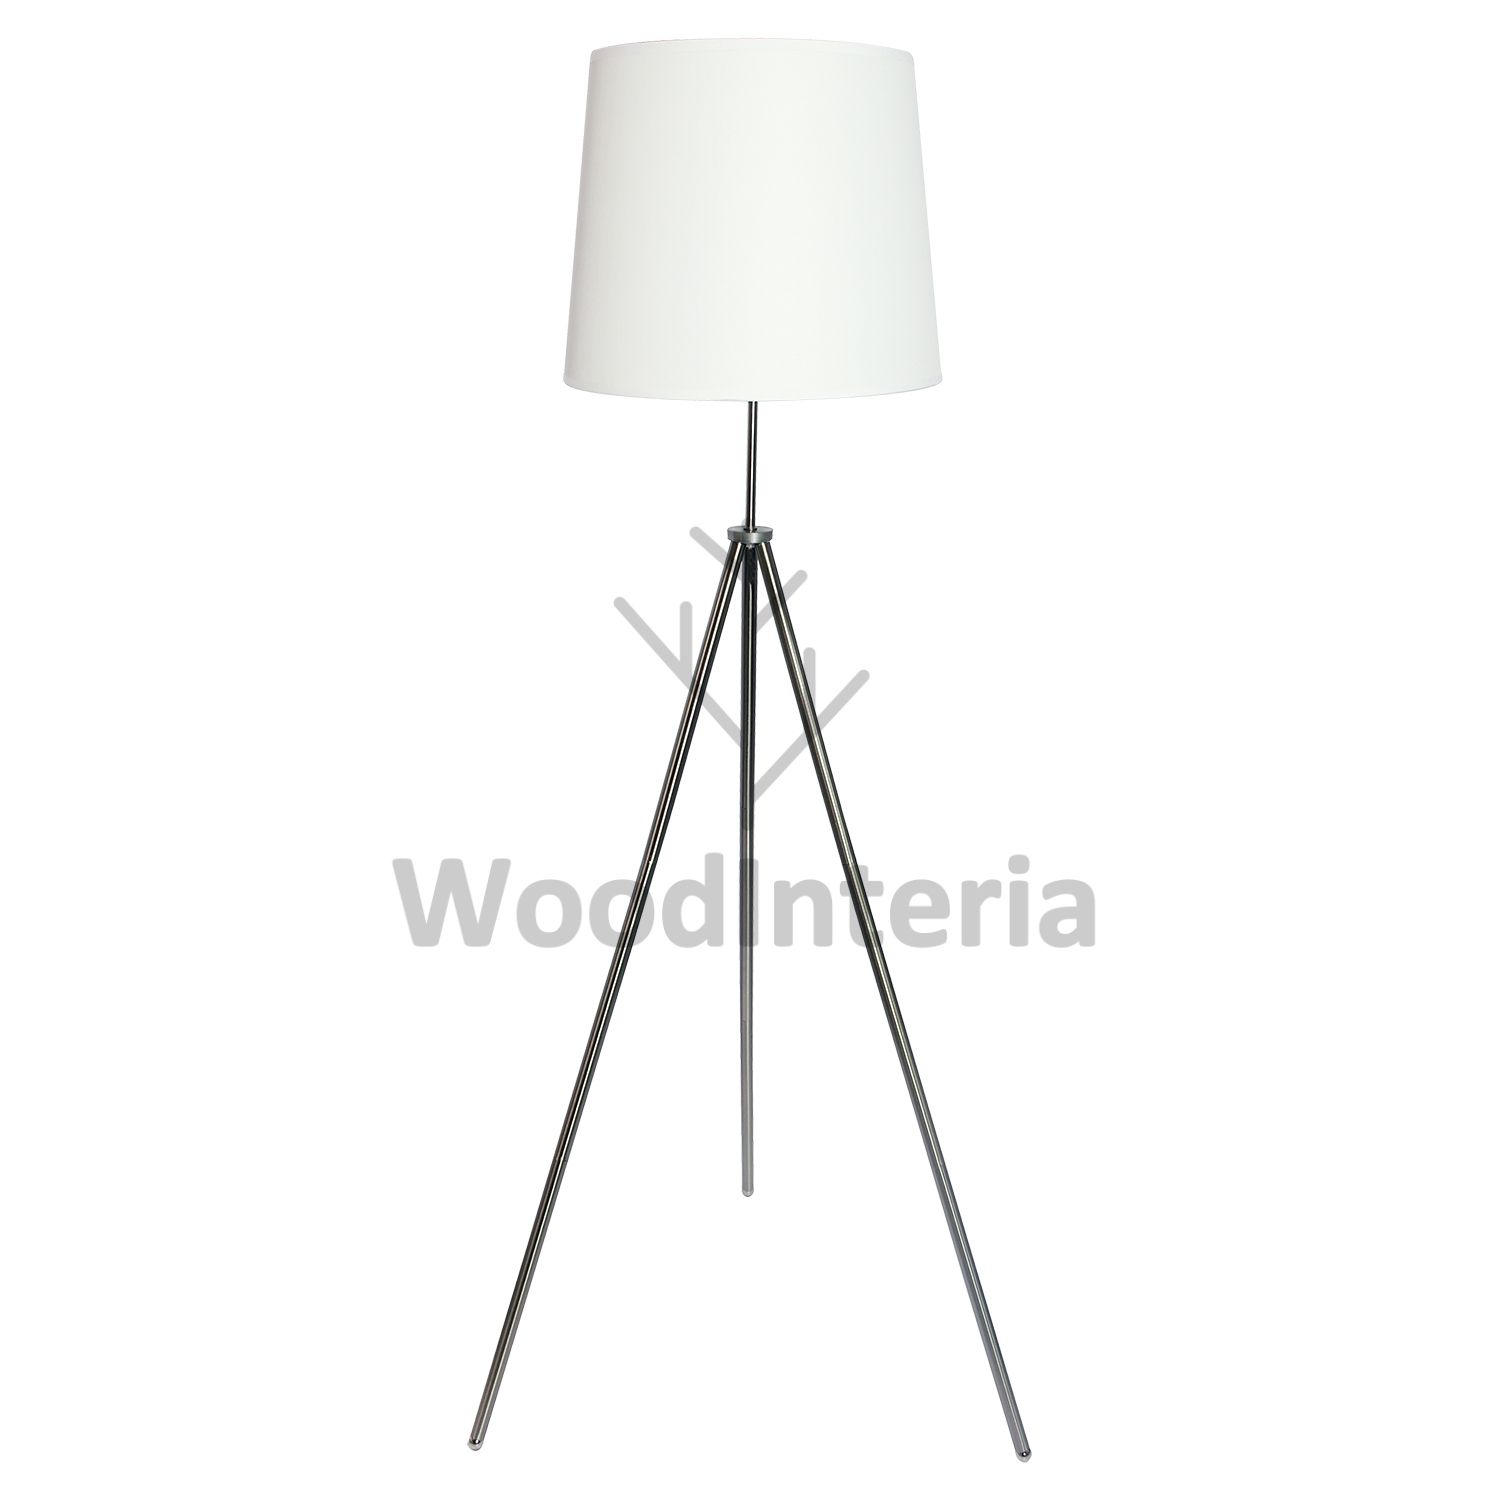 напольная лампа total style white в стиле лофт индастриал WoodInteria